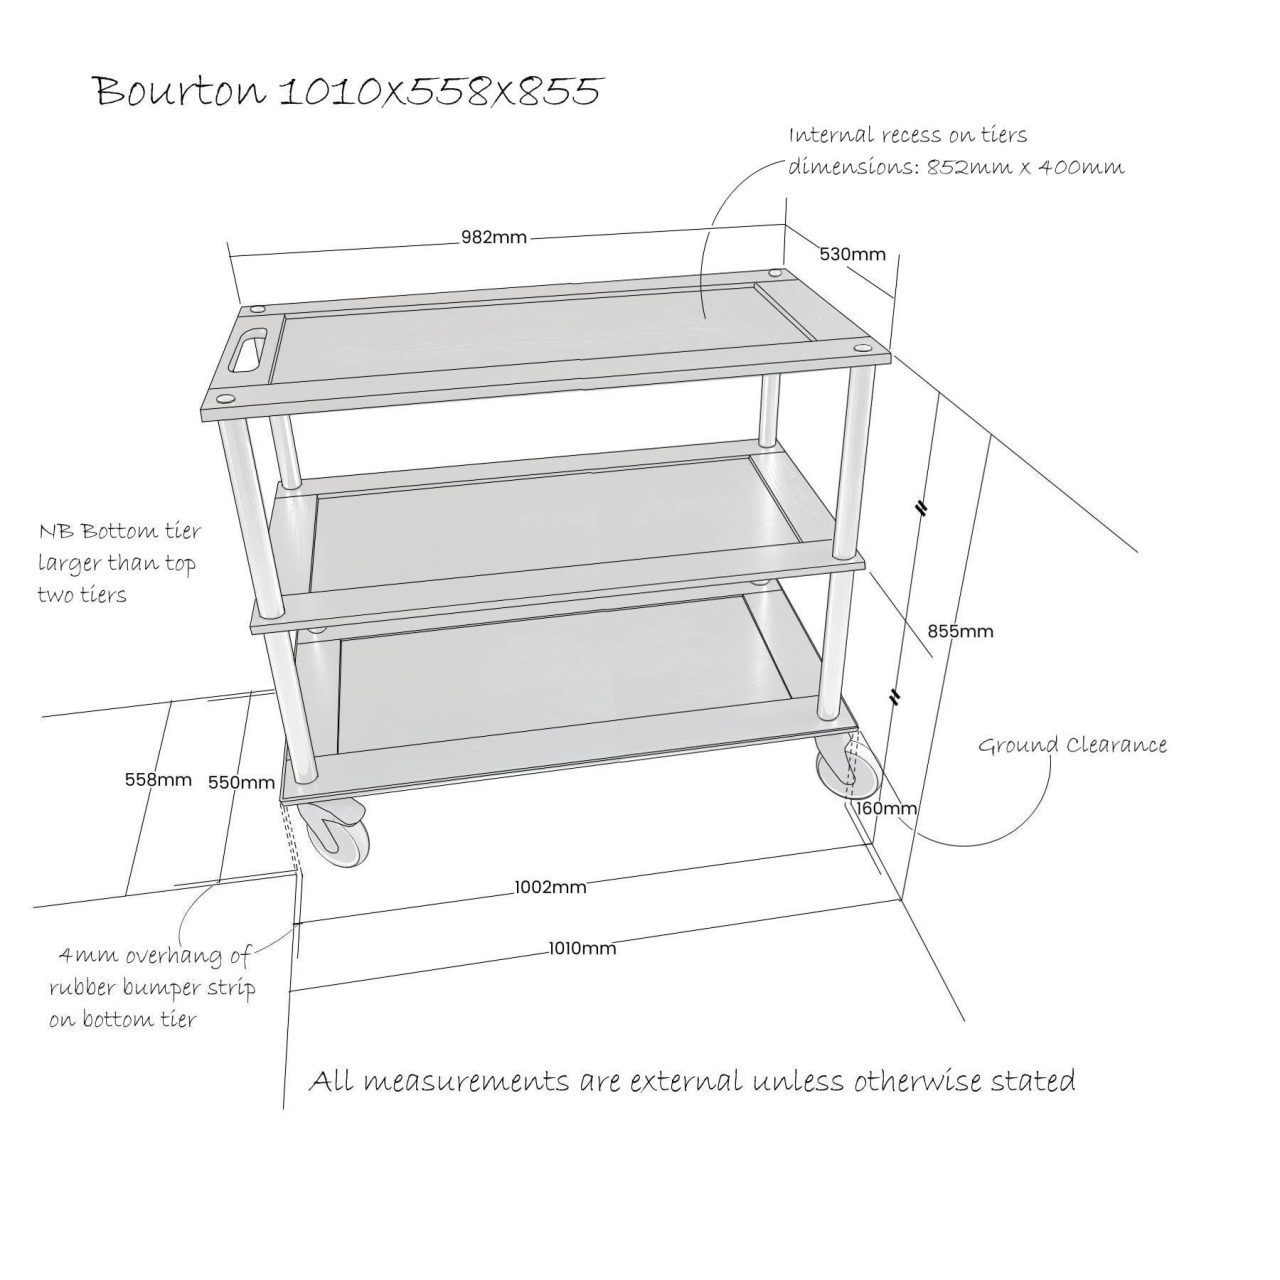 Bourton Long 1010x558x855 schematic